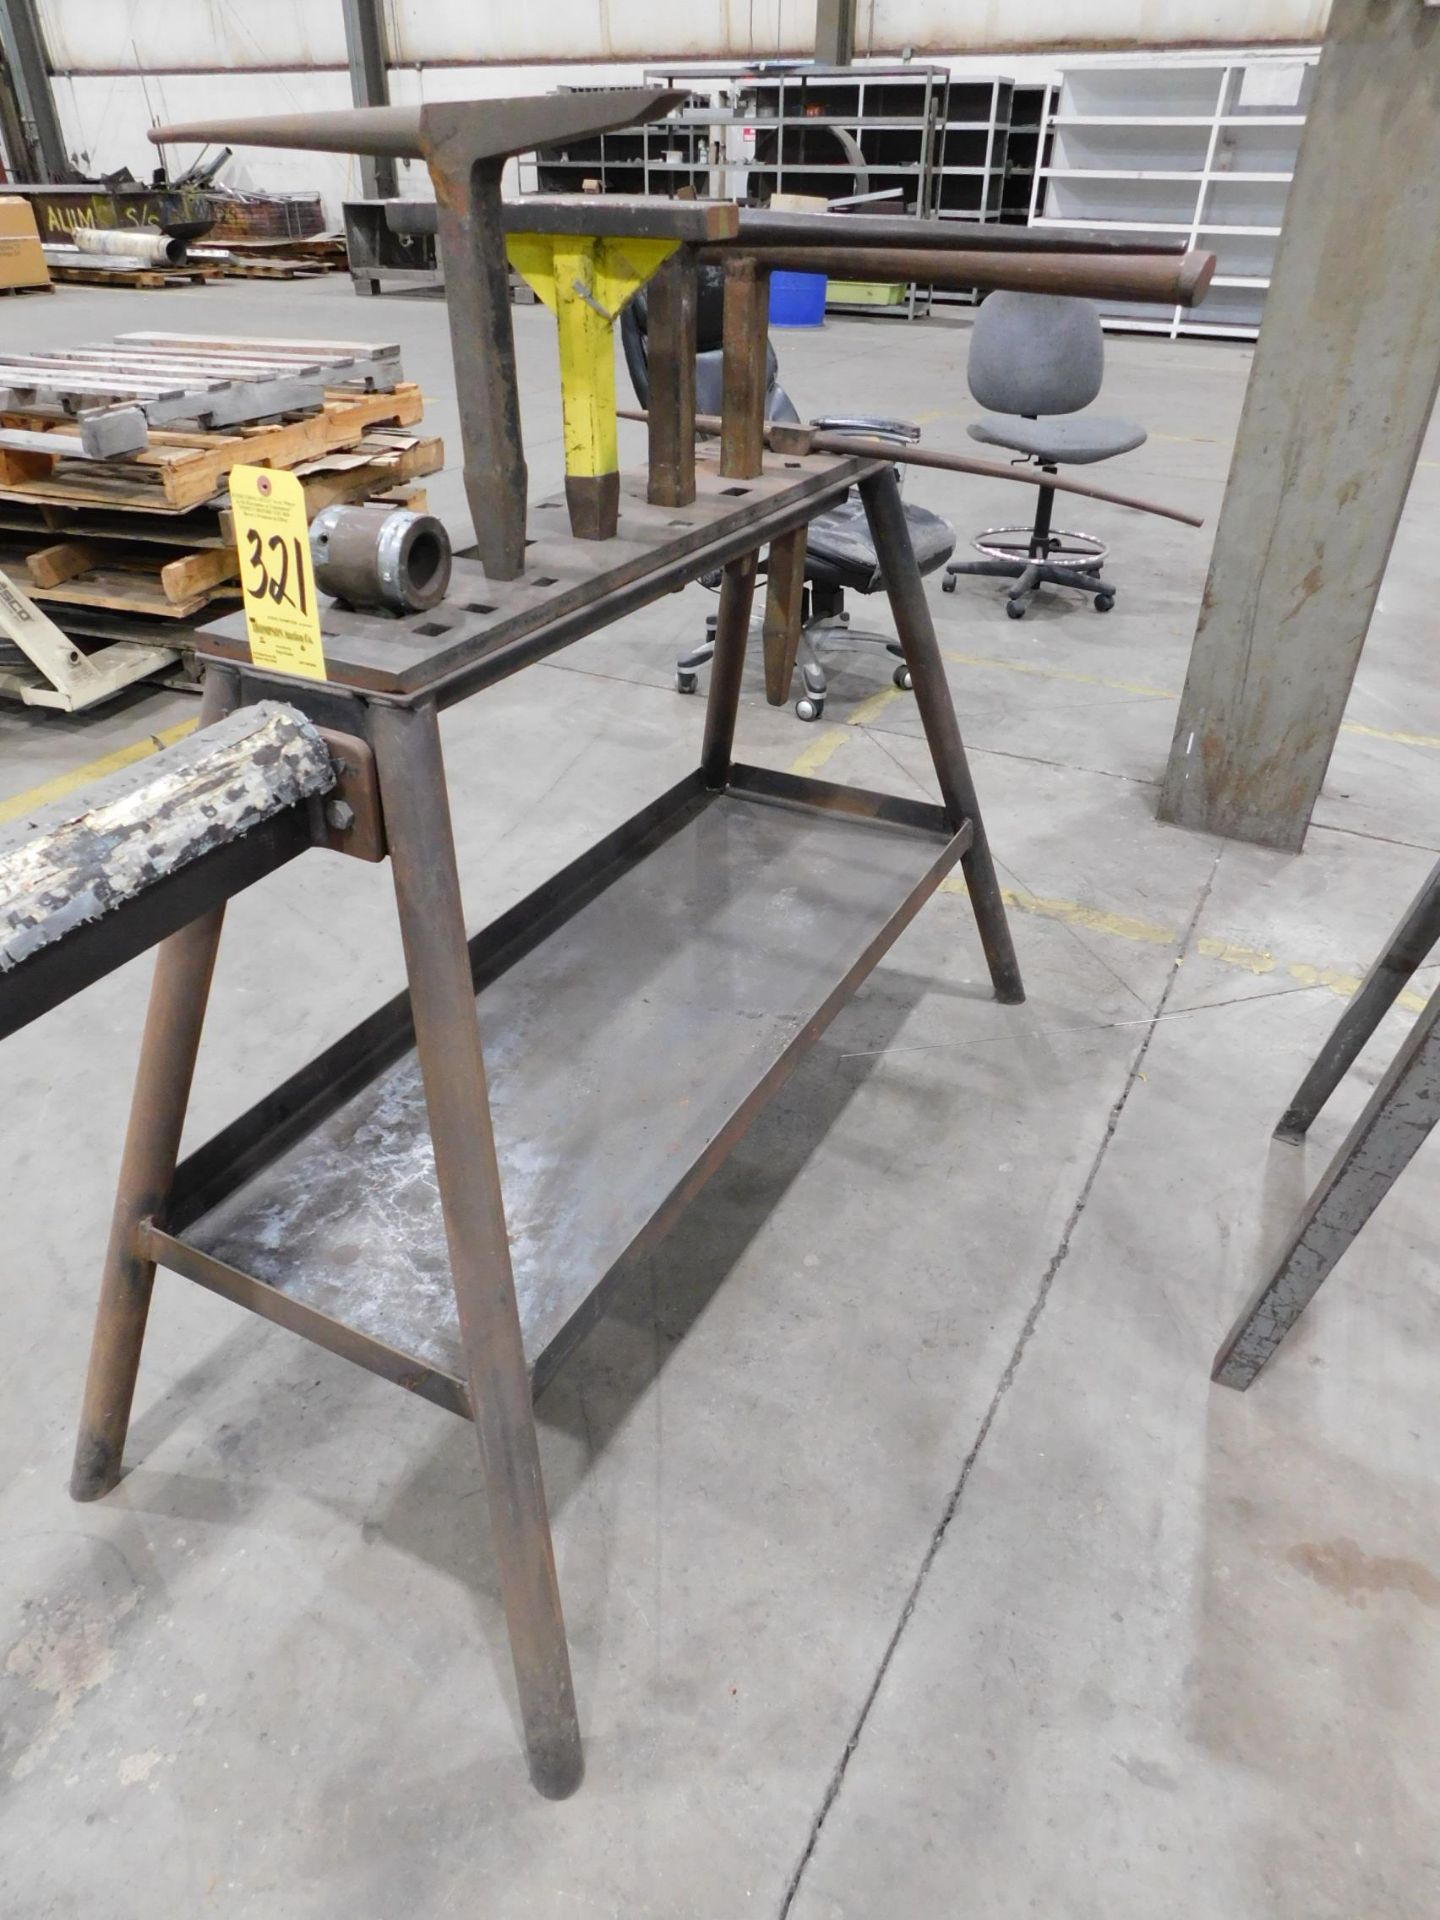 Pexto Metal Fabricators Bench with Blacksmith Tools - Image 6 of 6